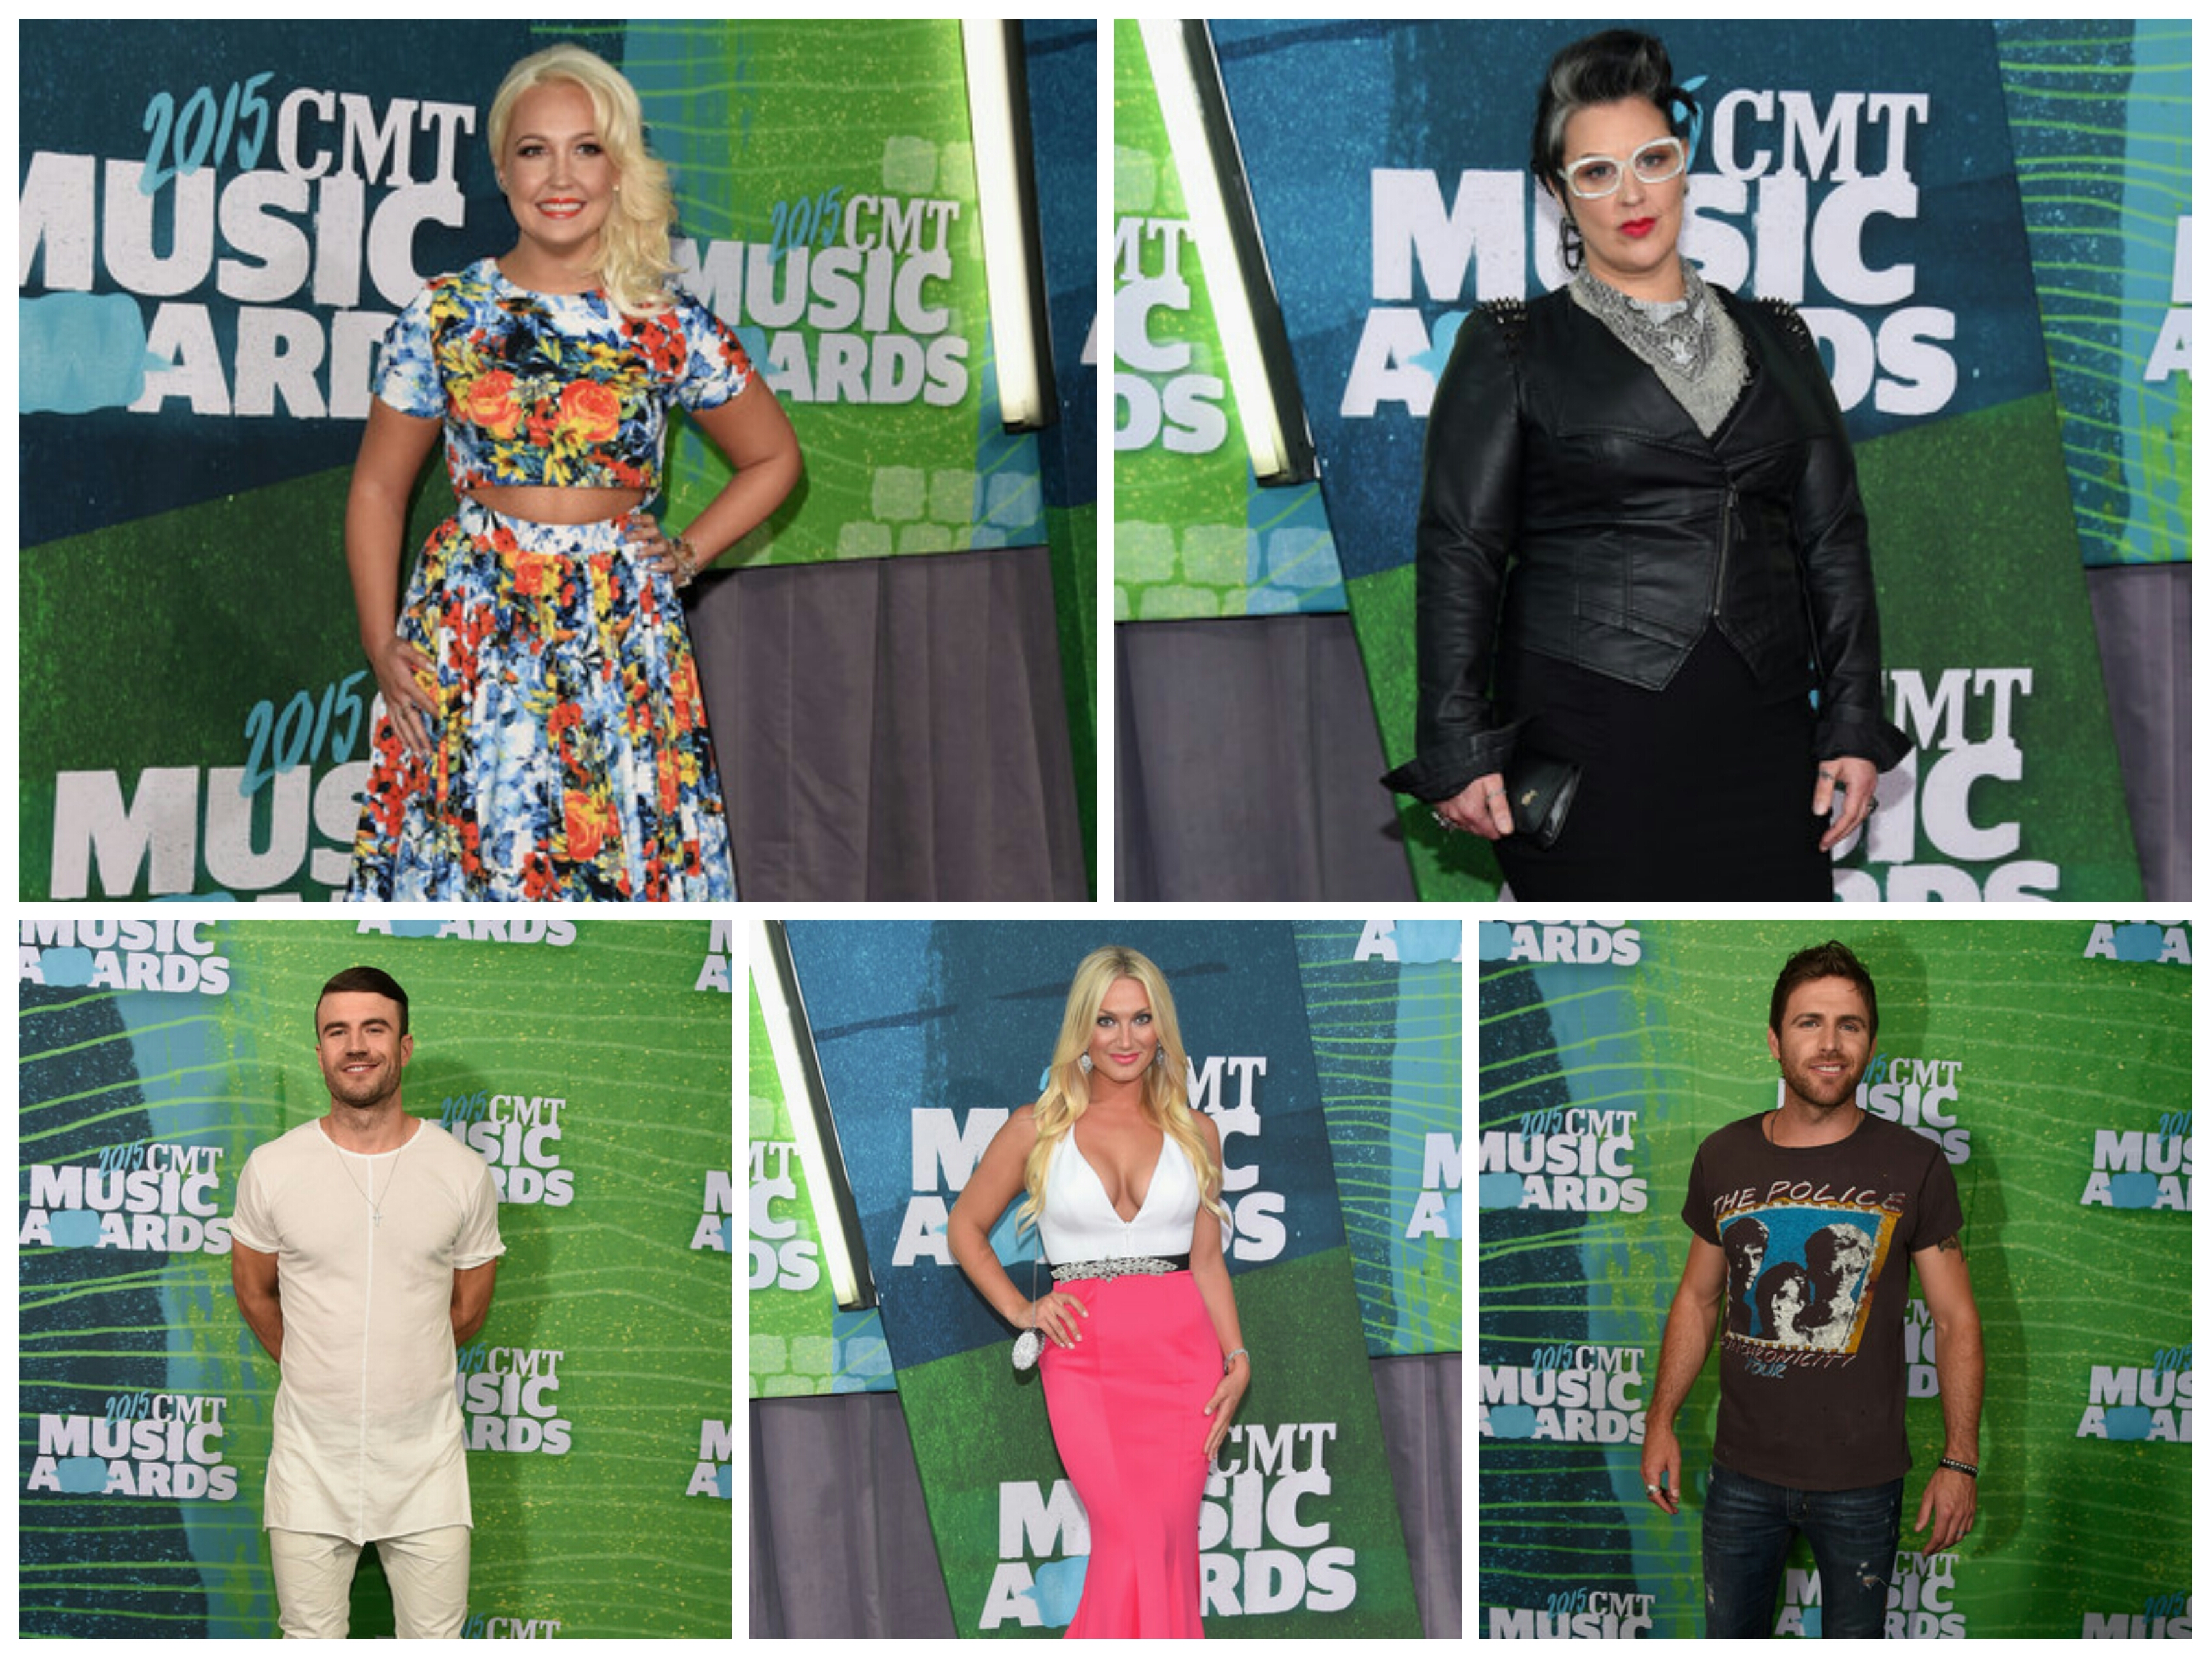 2015 CMT Music Awards Worst Dressed - CountryMusicIsLove